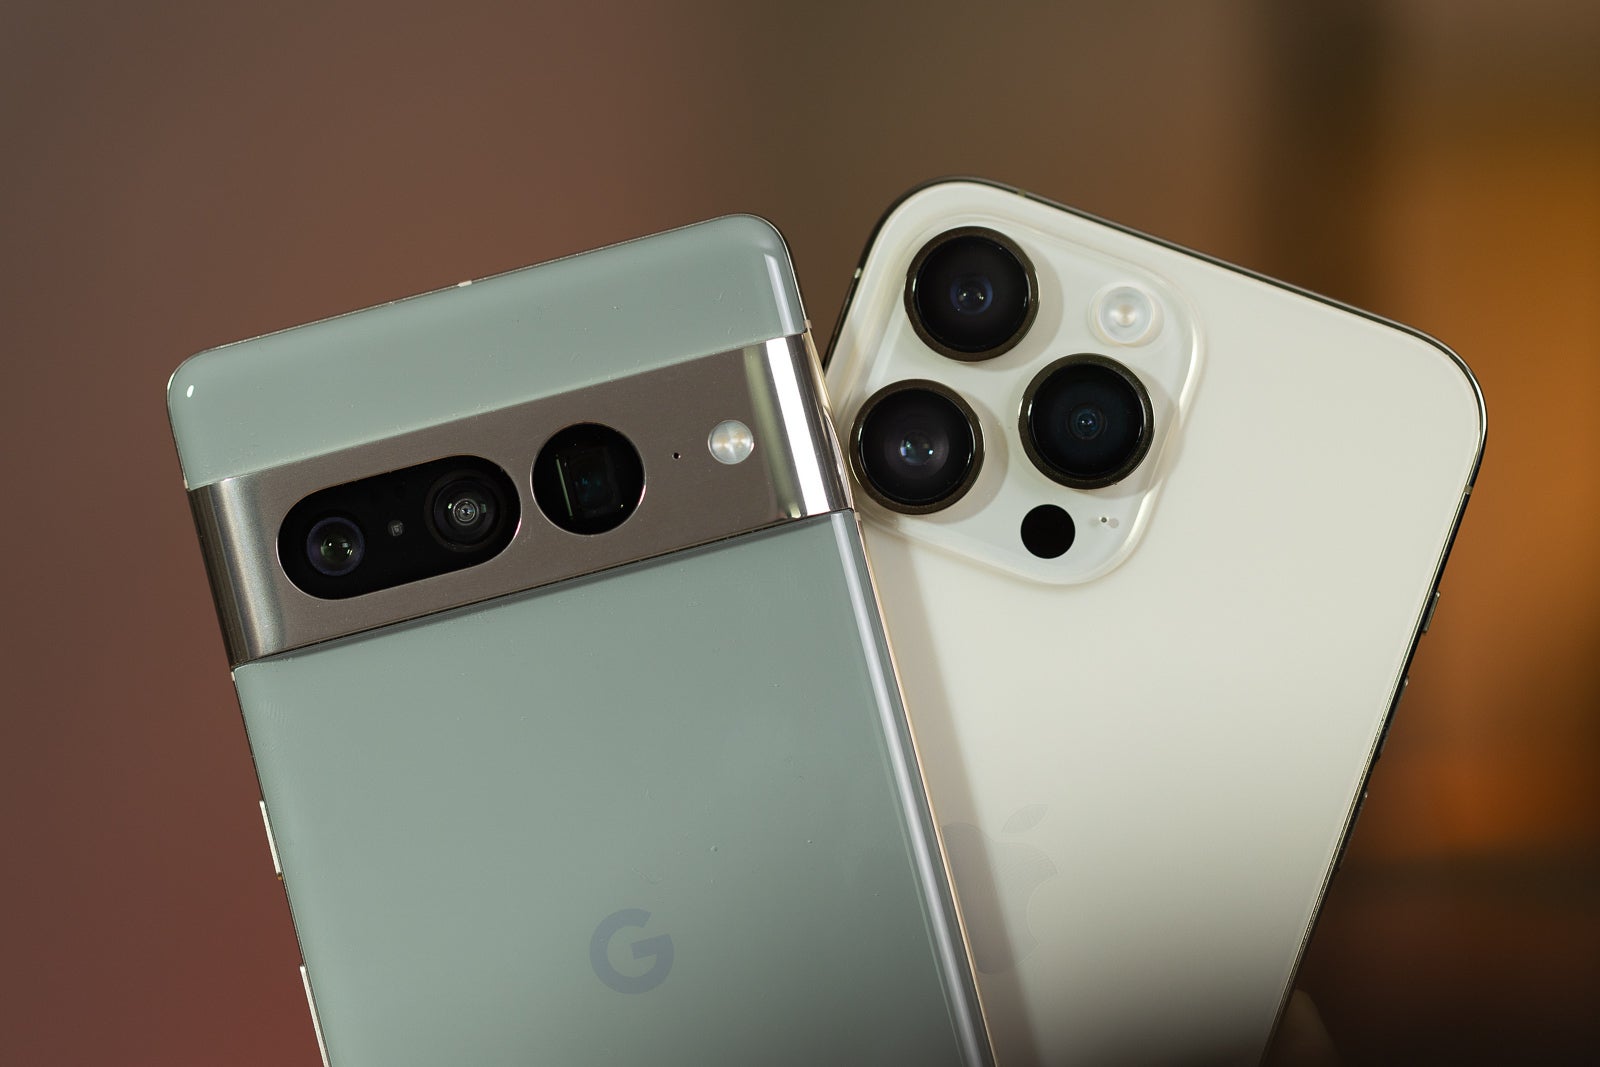 (Image Credit - PhoneArena) - Google Pixel 7 Pro vs iPhone 14 Pro Max: main differences